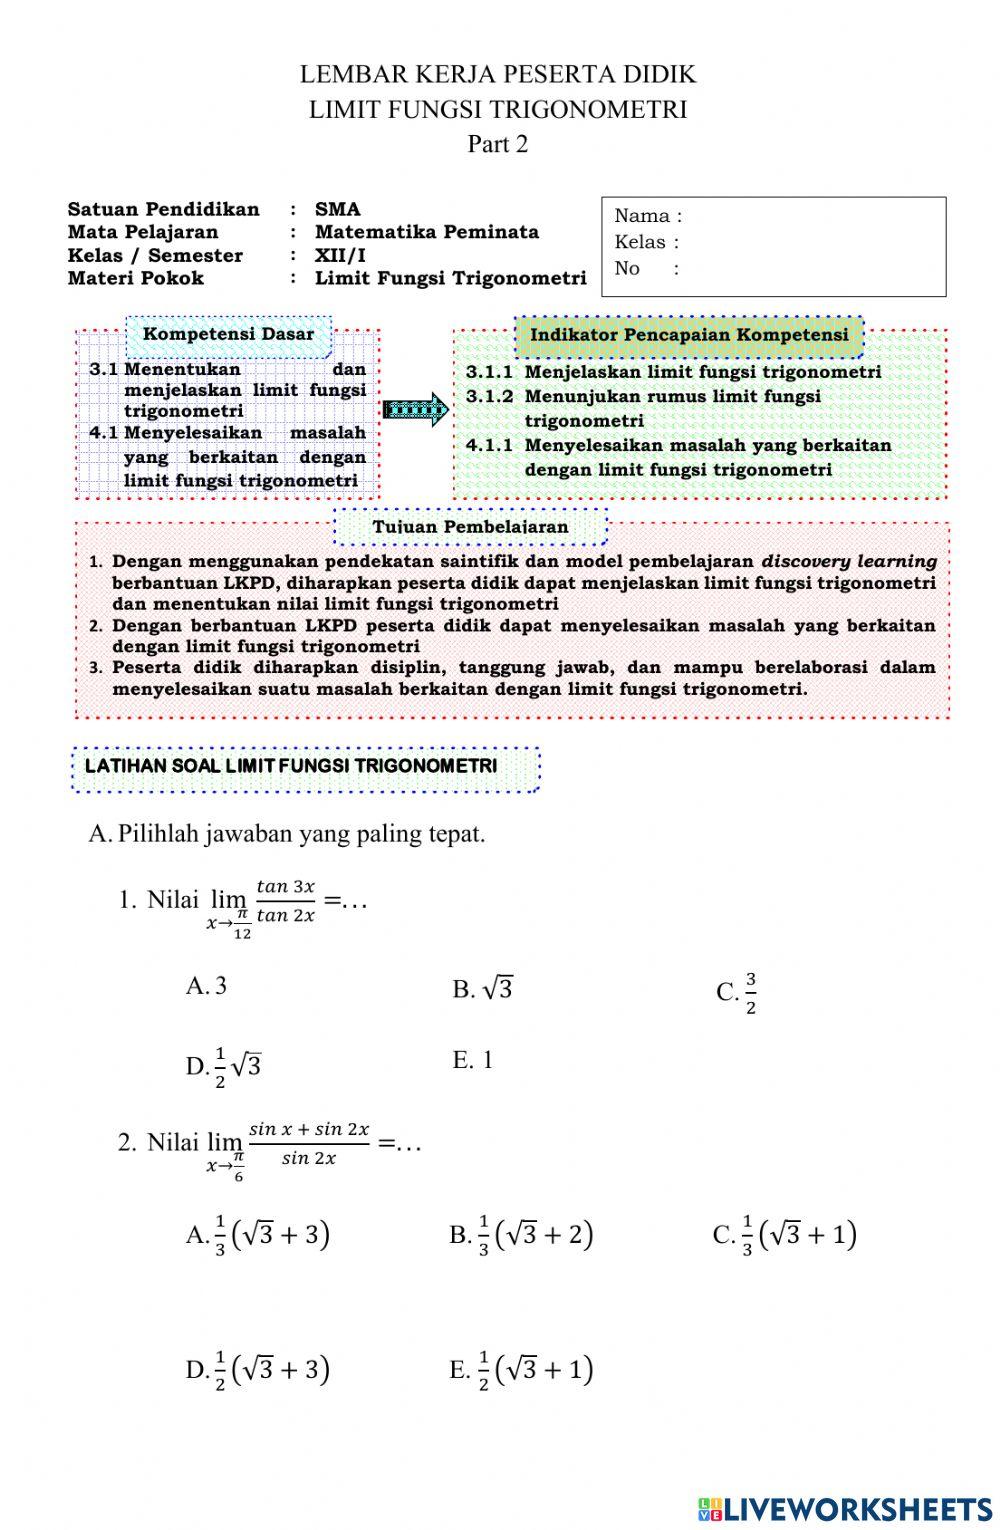 Latihan Soal Limit Fungsi Trigonometri